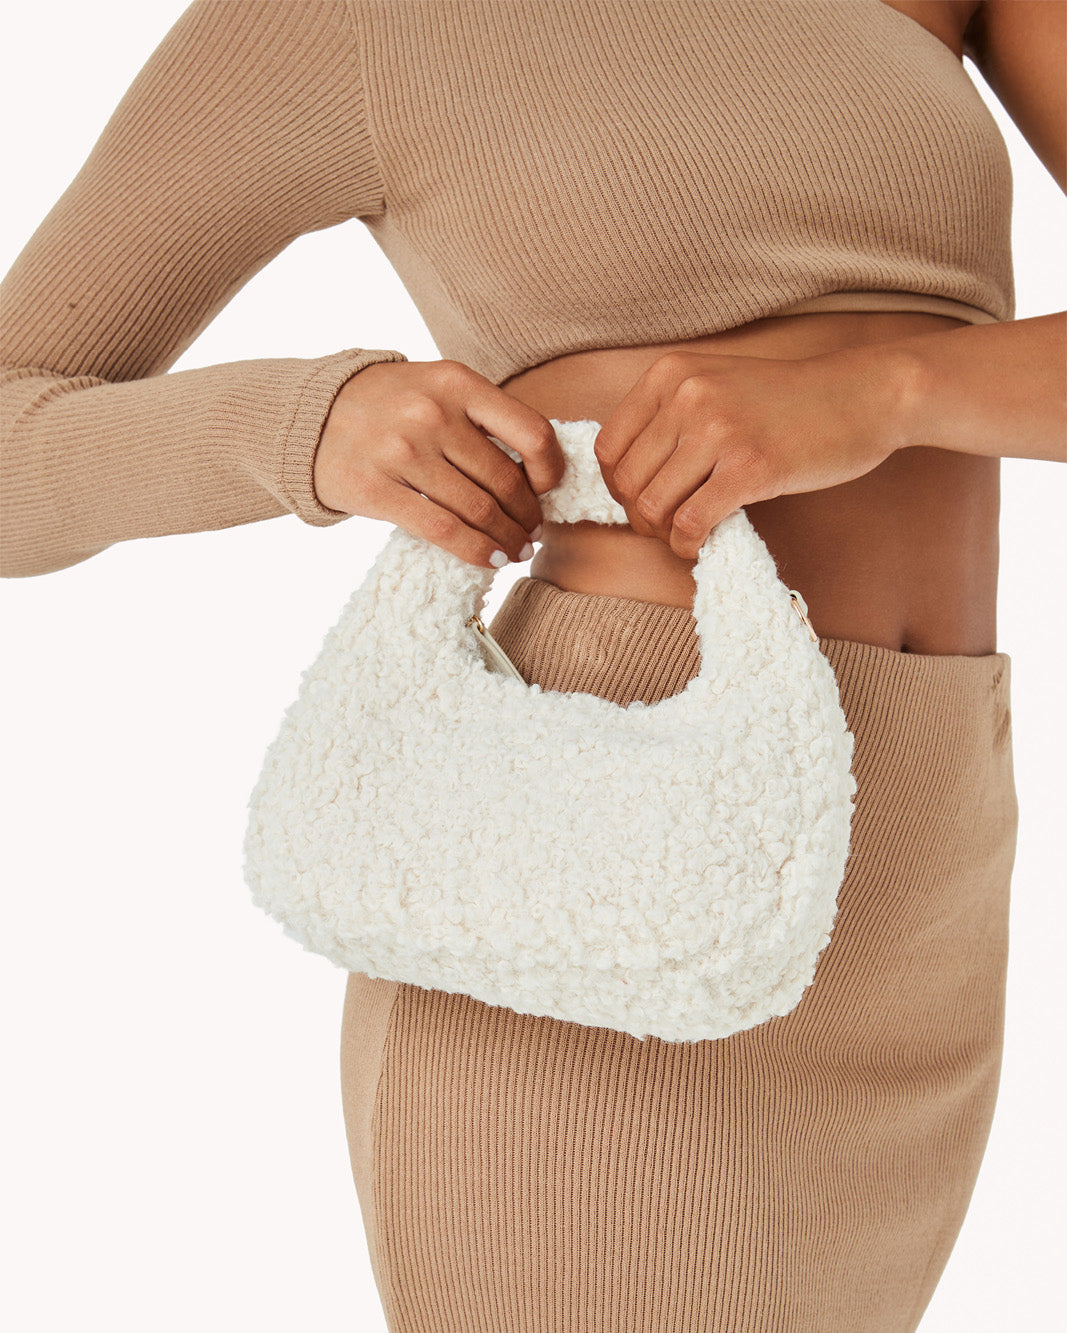 MAGDA HANDLE BAG - BONE SHEARLING-Handbags-Billini--BILLINI USA